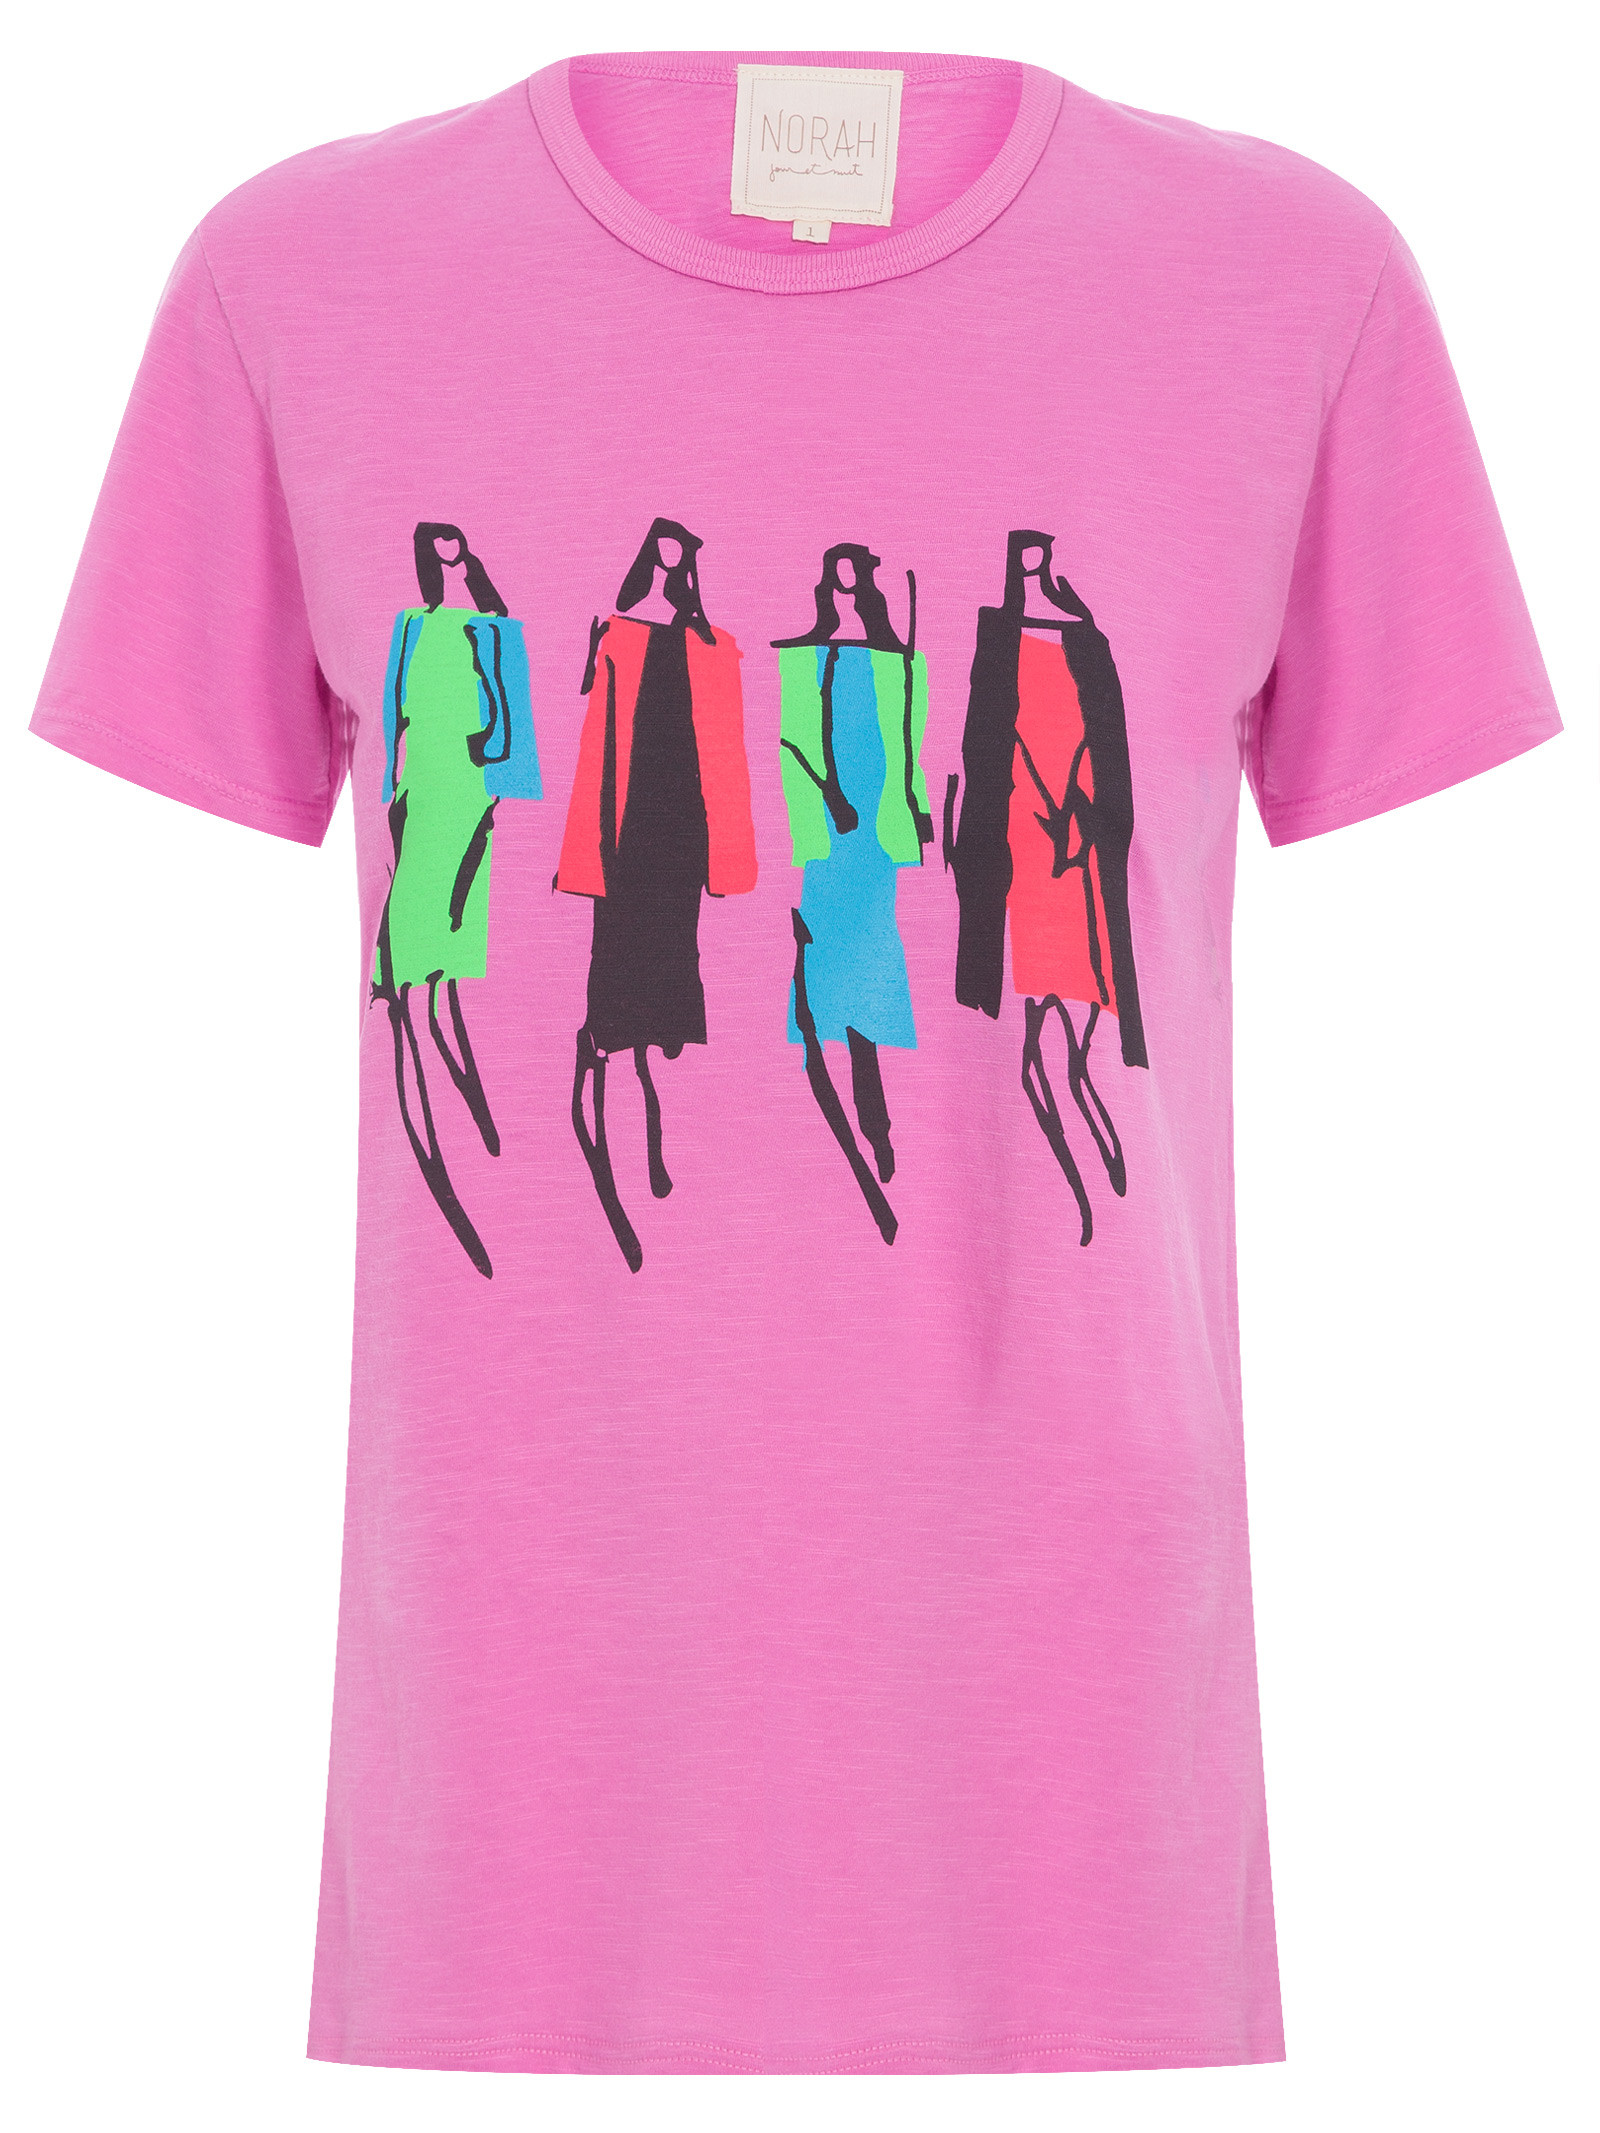 T-Shirt Feminina Neon Bonecas - Norah Jour Et Nuit - Rosa - Shop2gether